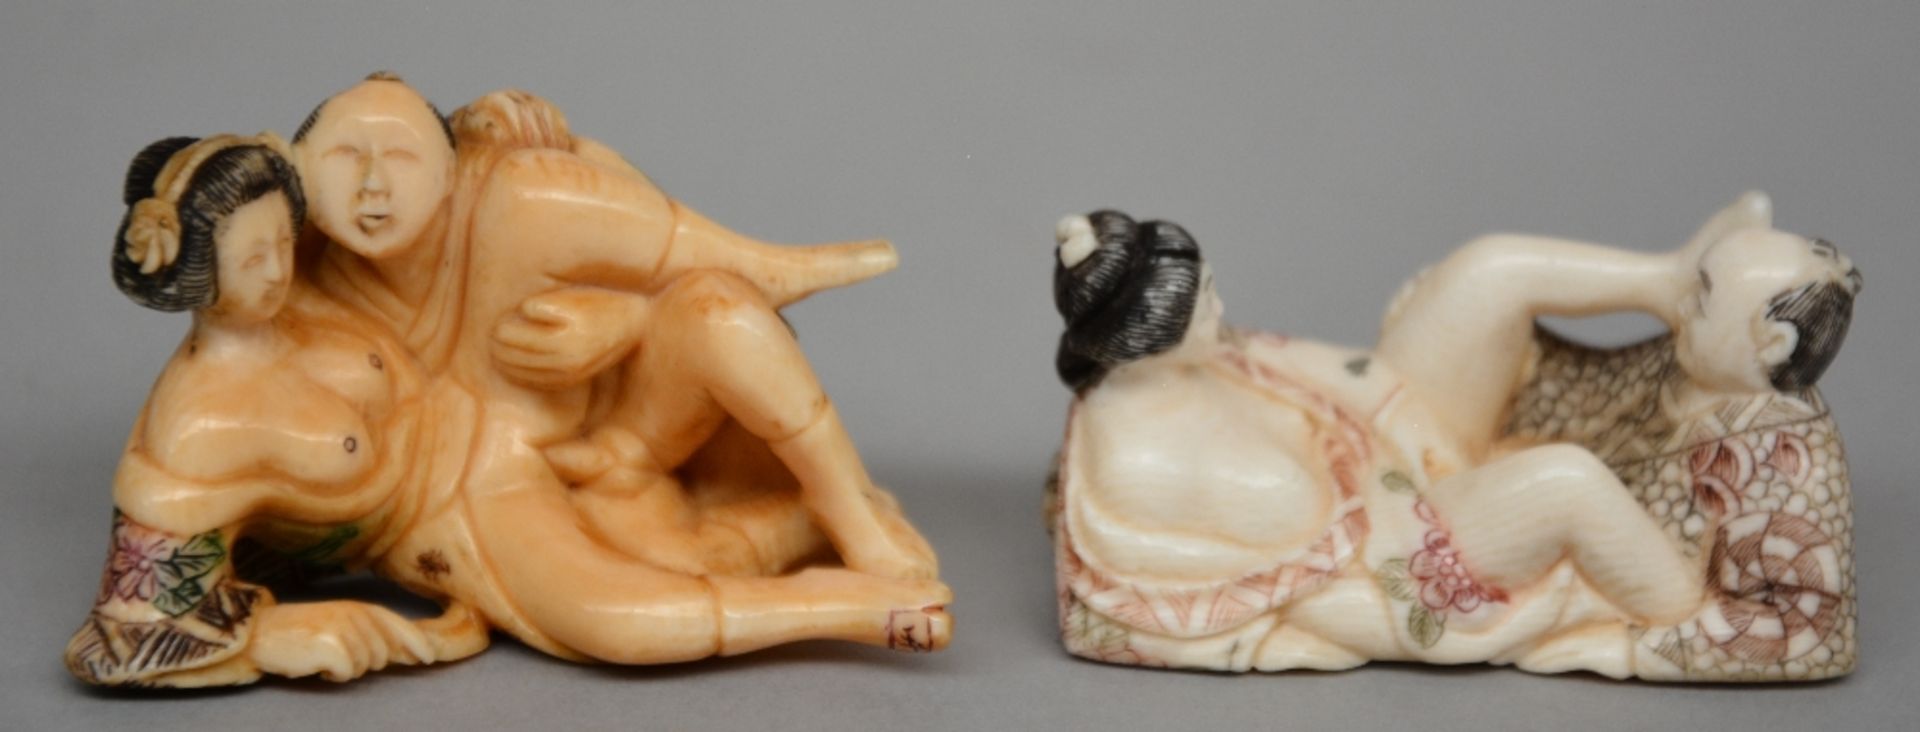 Five ivory erotic sculptures, Japanese style, scrimshaw decorated, first half of 20thC, H 3 - 7 - Bild 6 aus 10